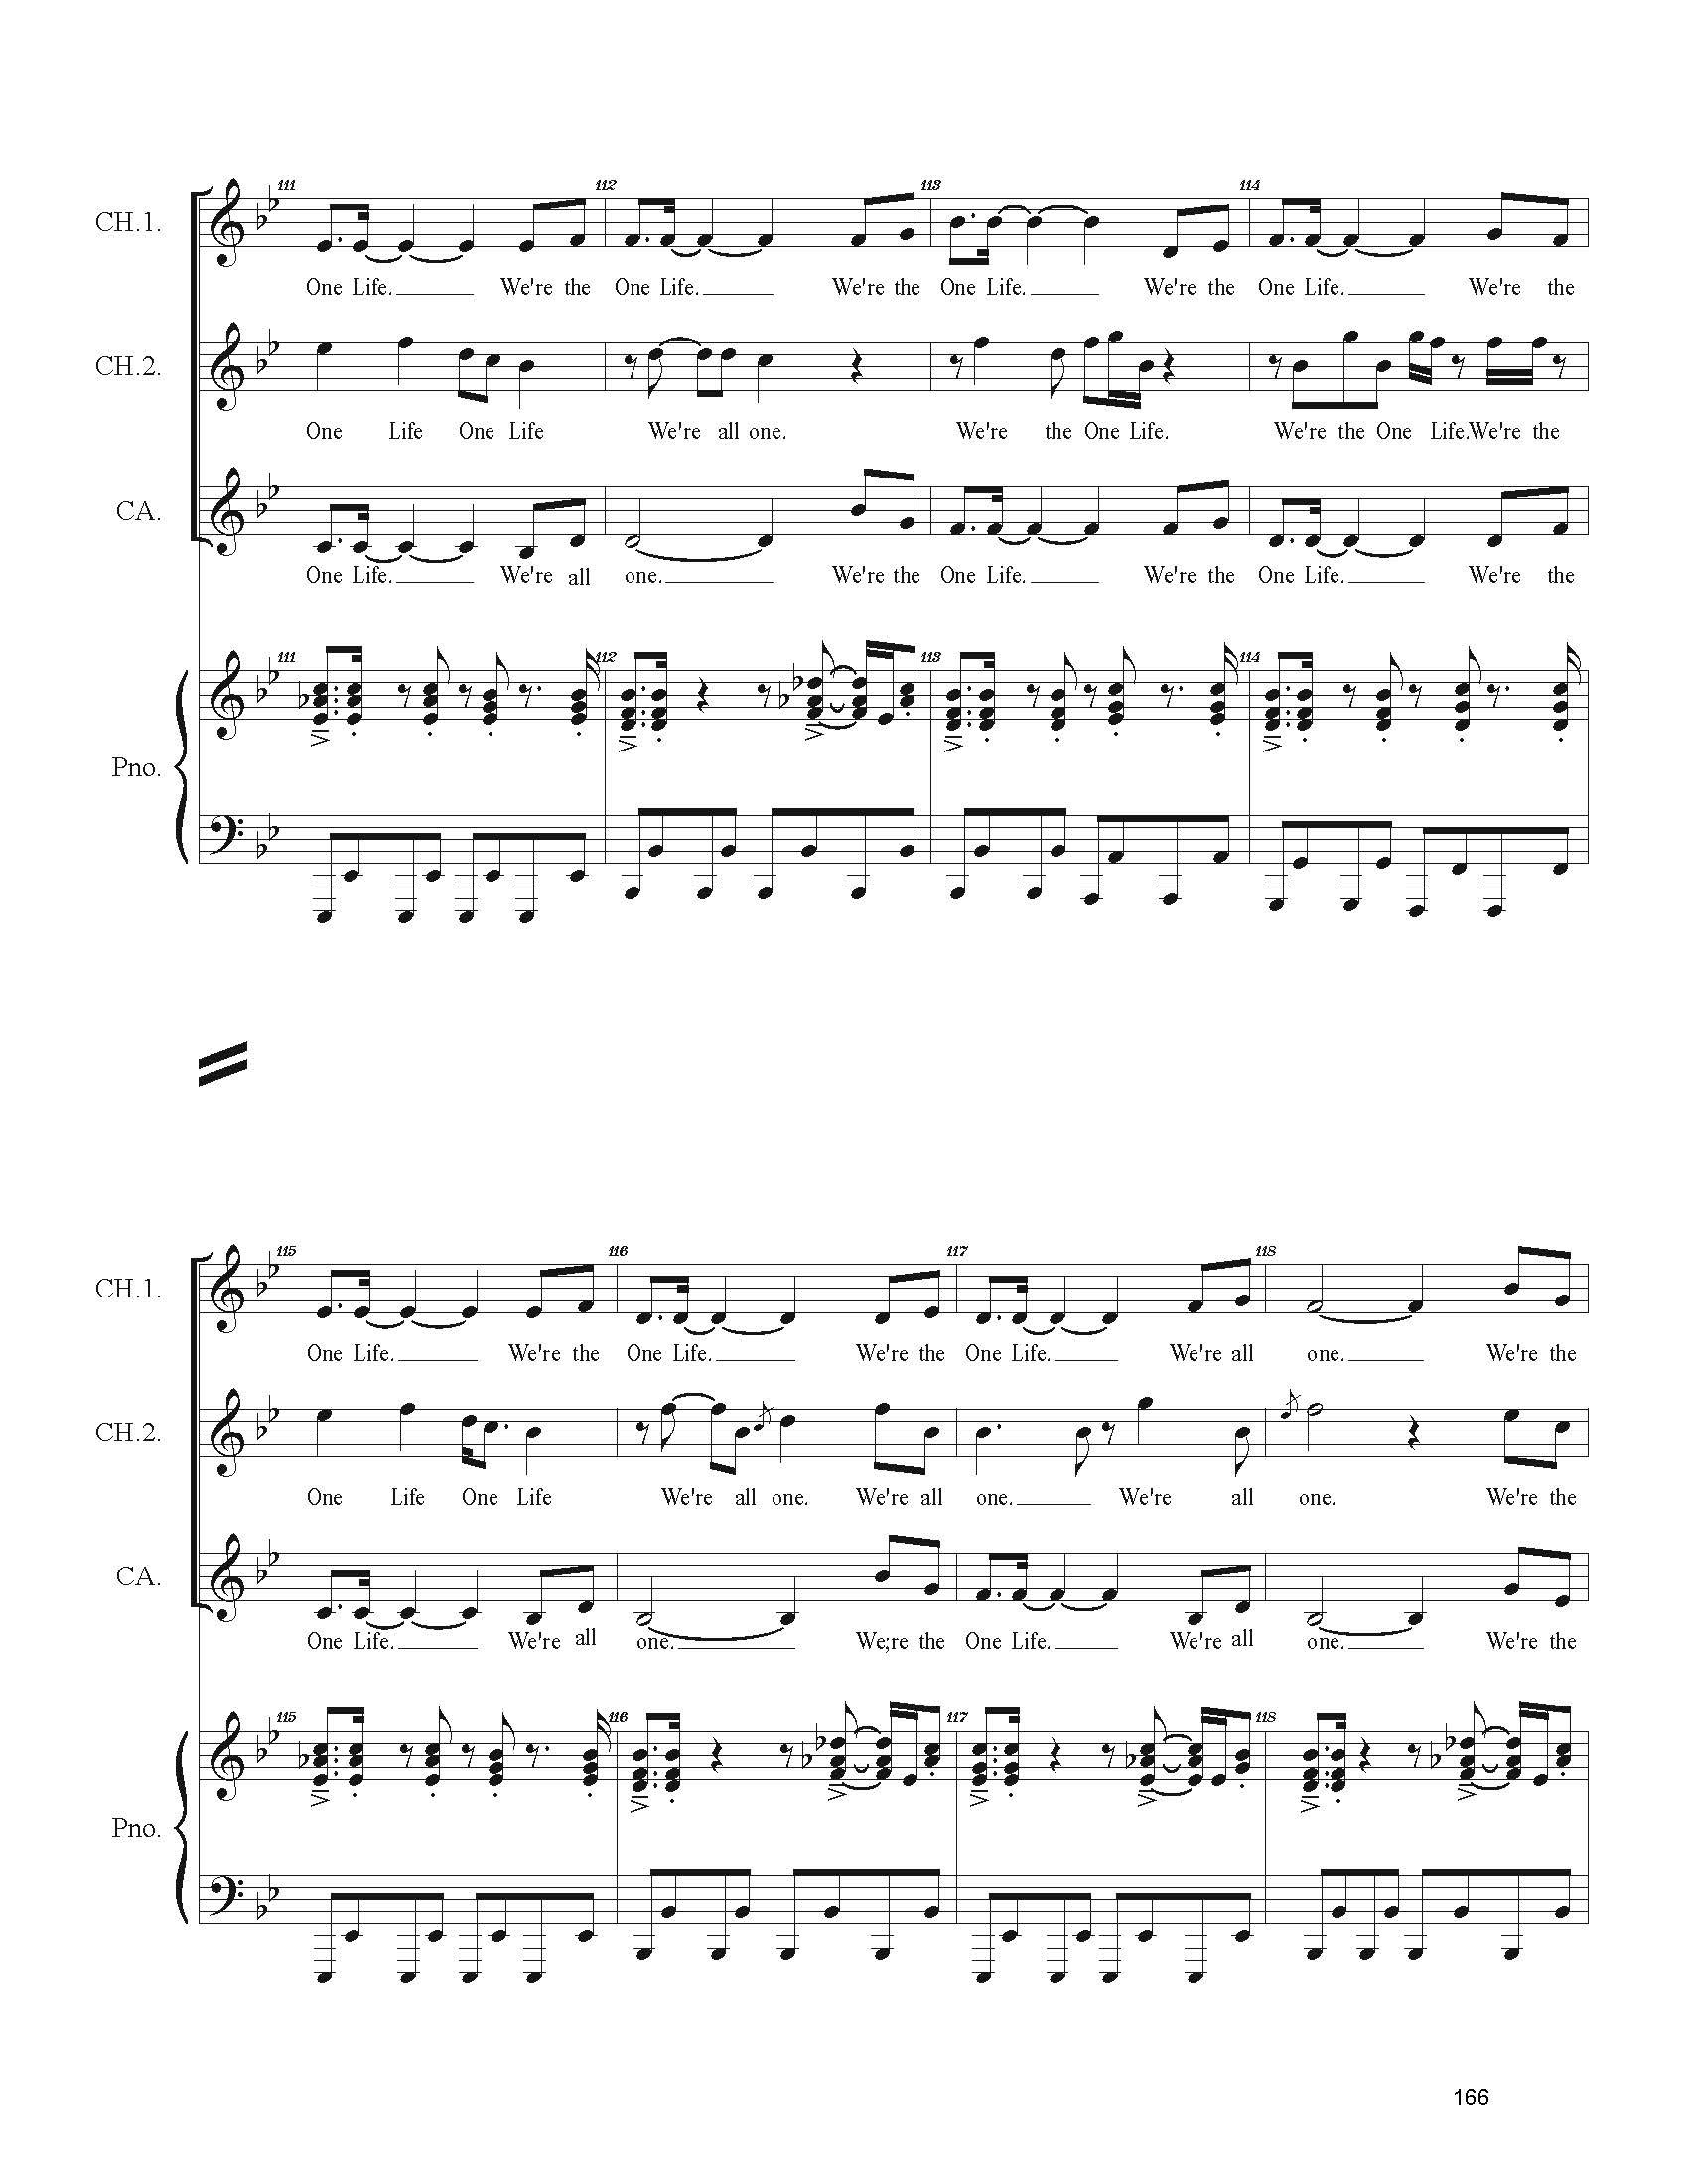 FULL PIANO VOCAL SCORE DRAFT 1 - Score_Page_166.jpg